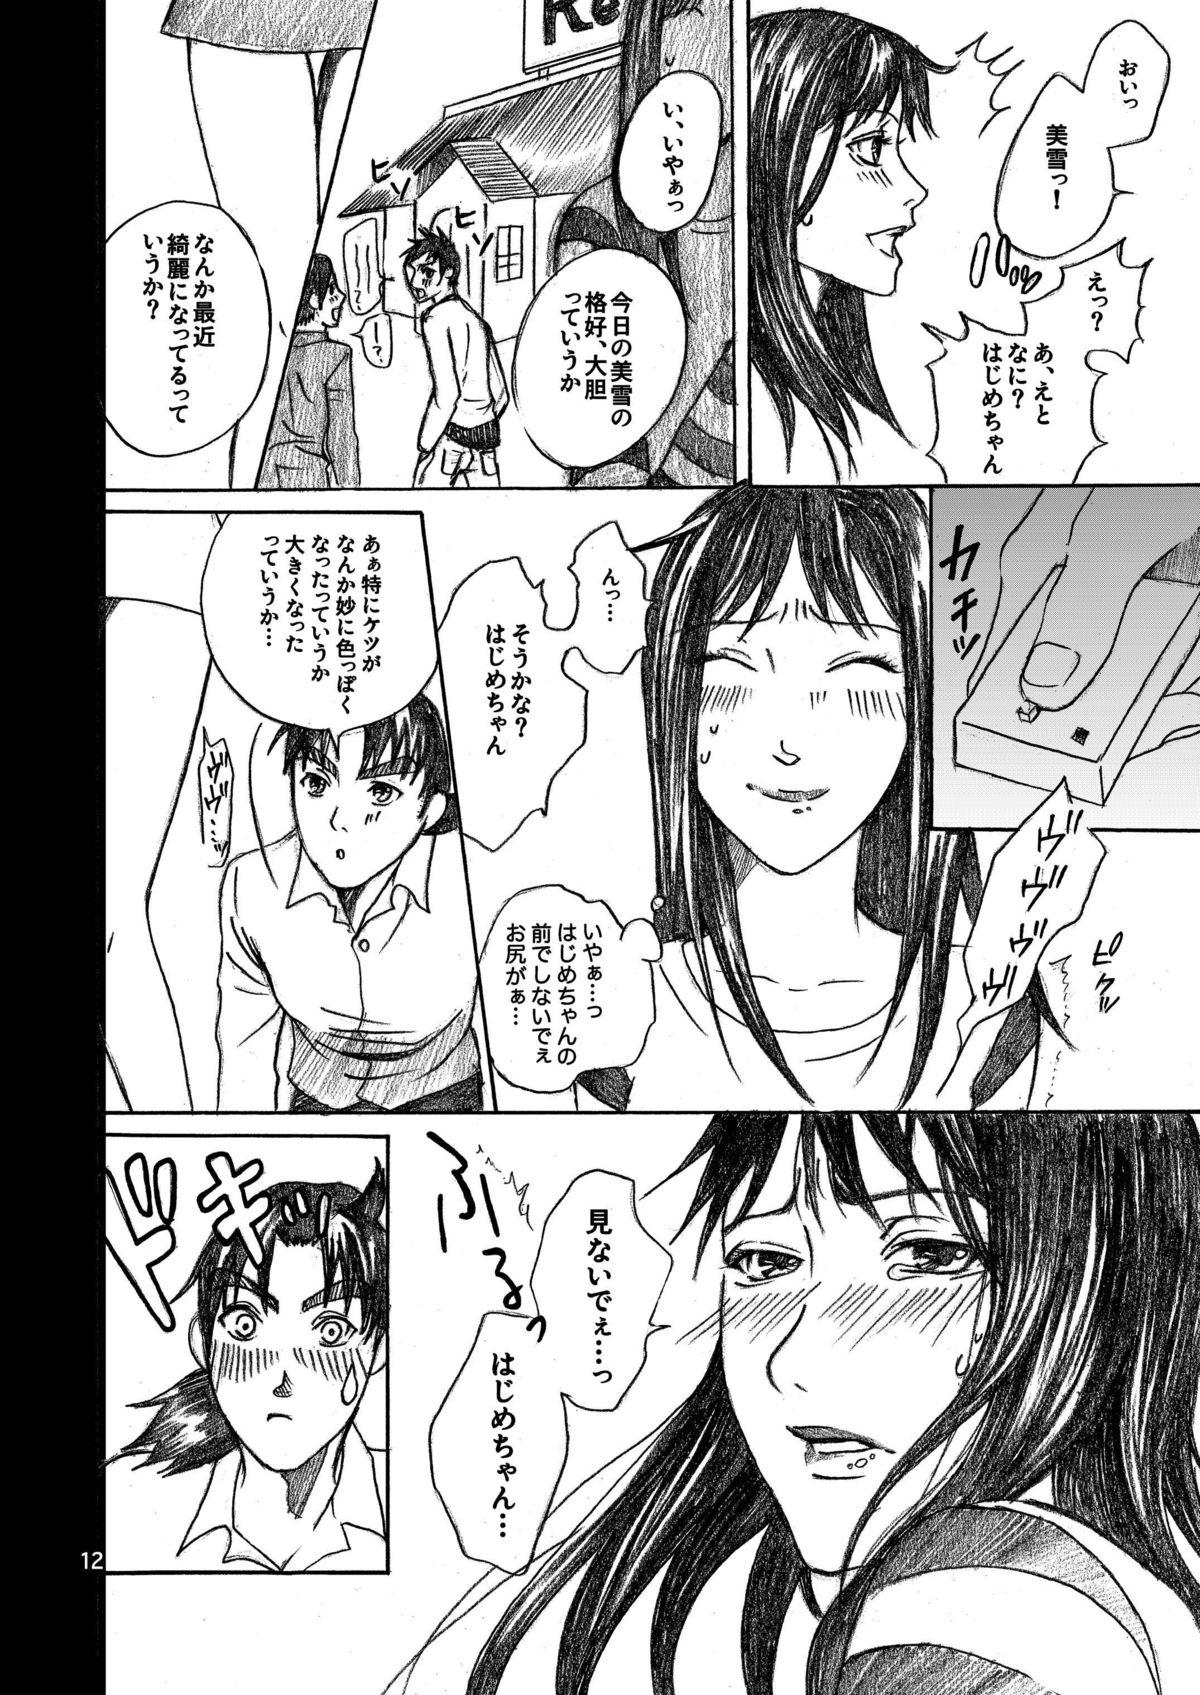 Foot Fetish Nanase Shoujo no Jikenbo Case 2 - Kindaichi shounen no jikenbo Caliente - Page 12